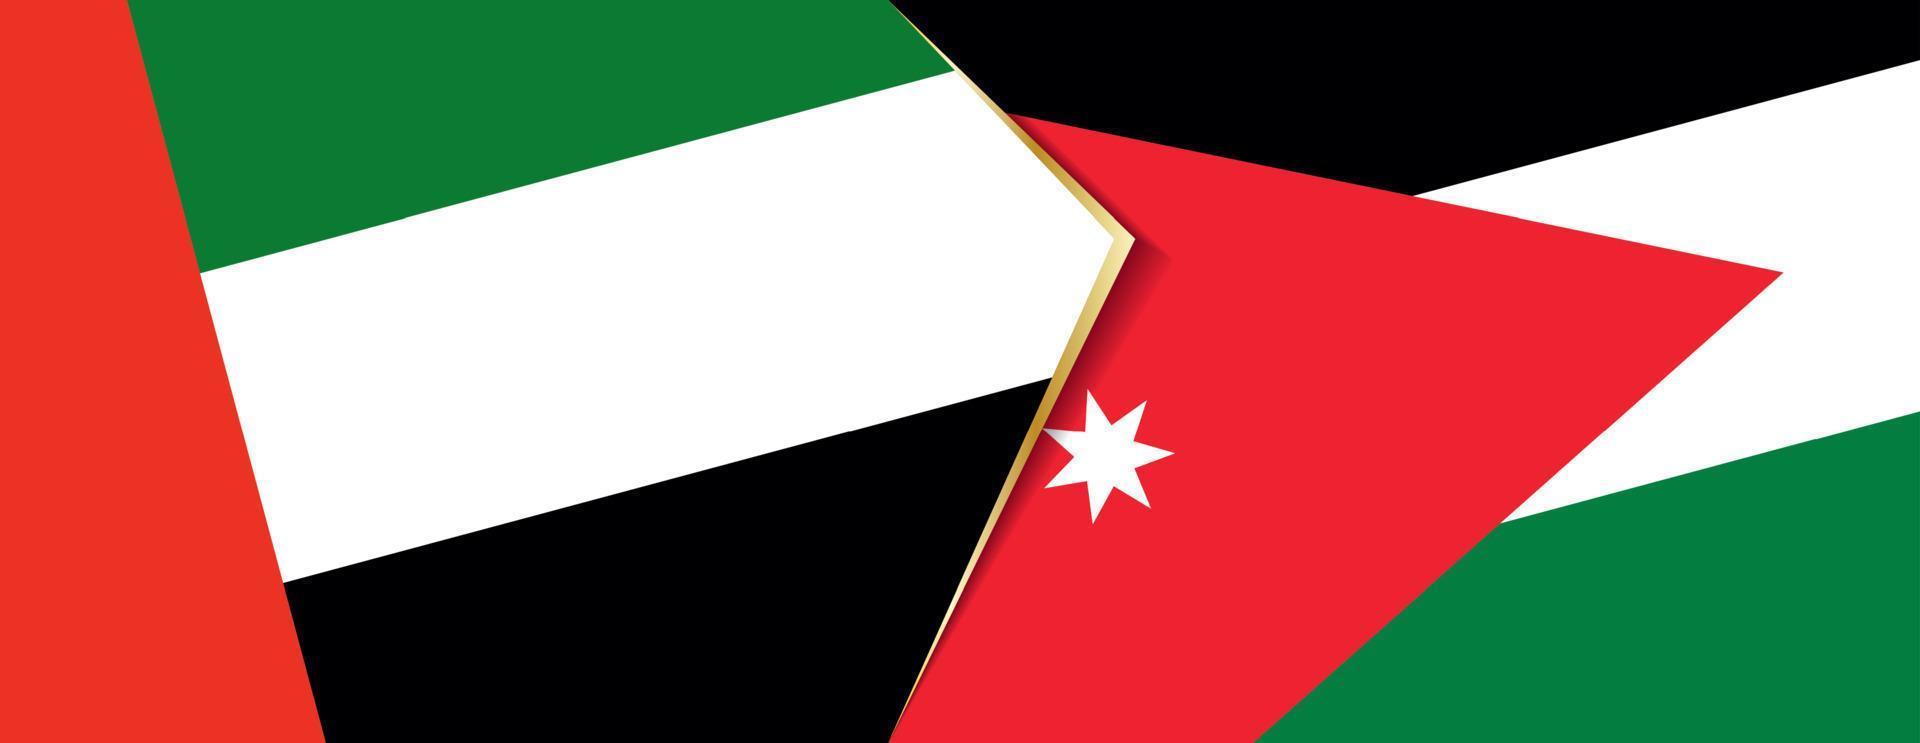 Unidos árabe Emirados e Jordânia bandeiras, dois vetor bandeiras.